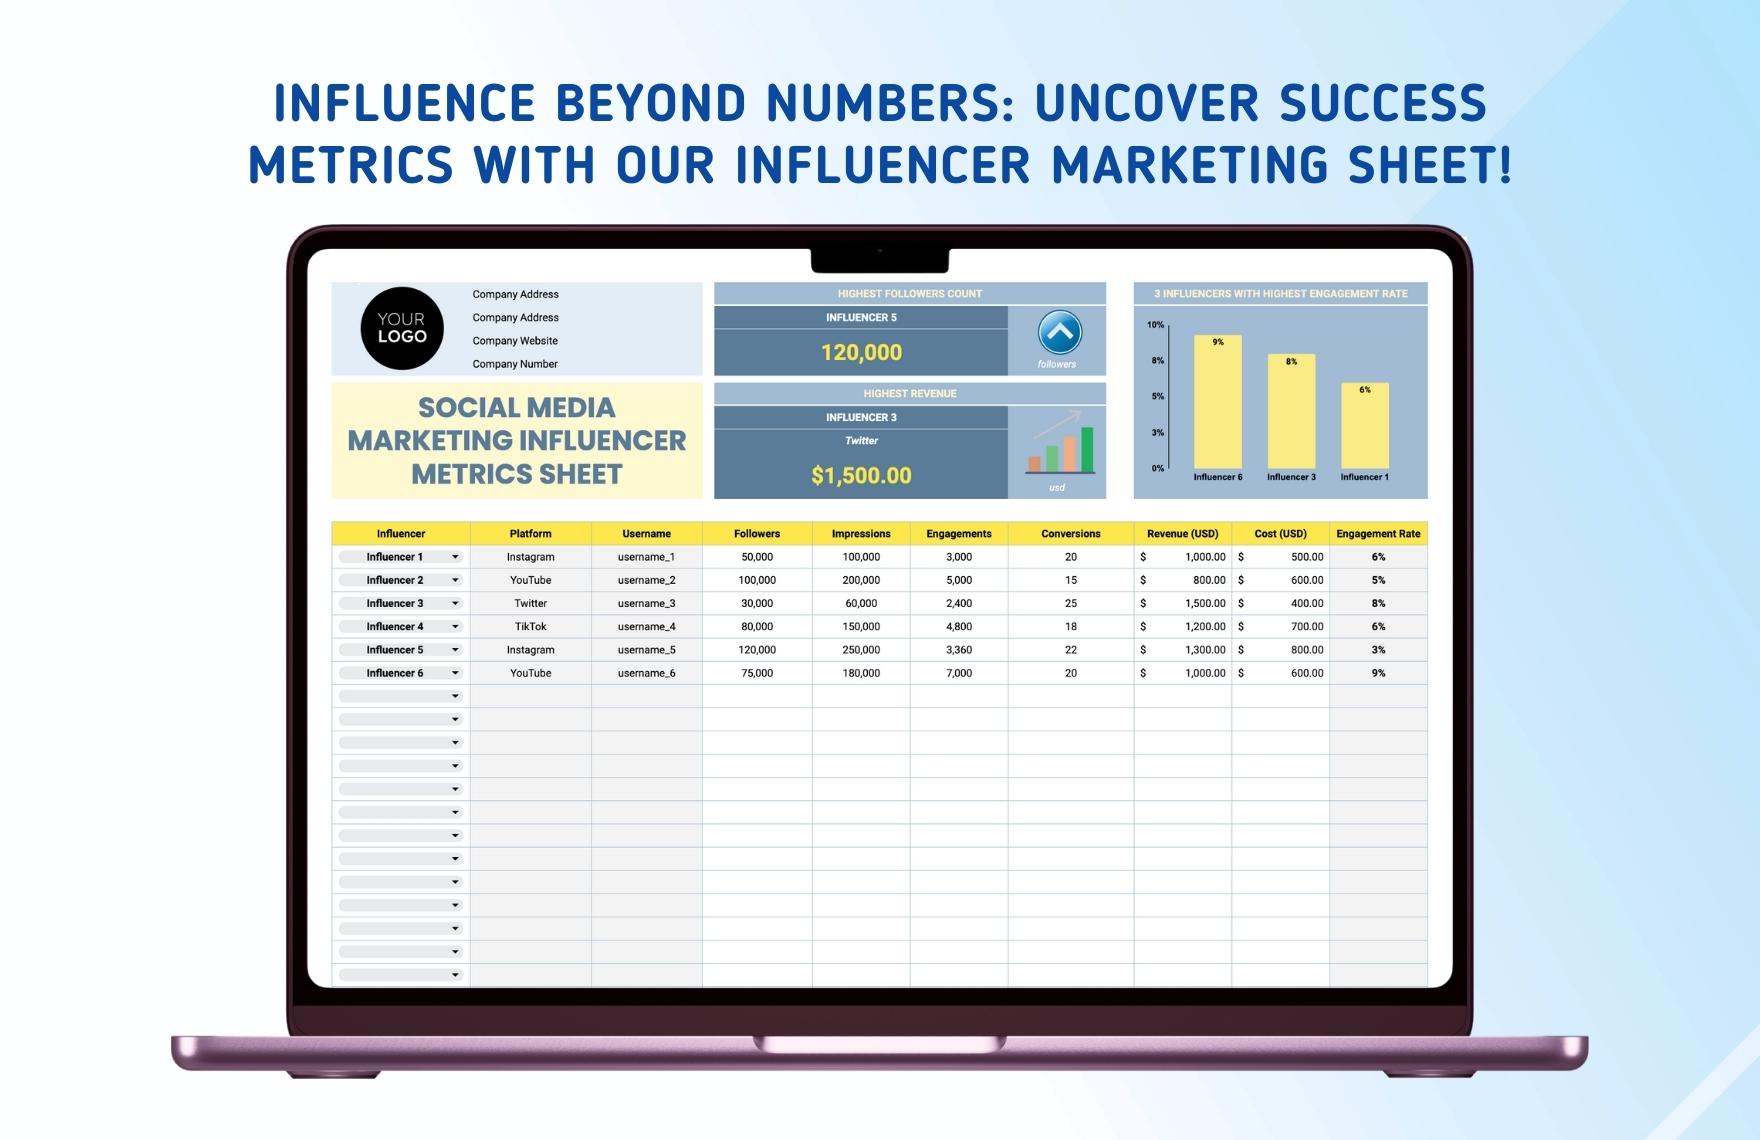 Social Media Marketing Influencer Metrics Sheet Template